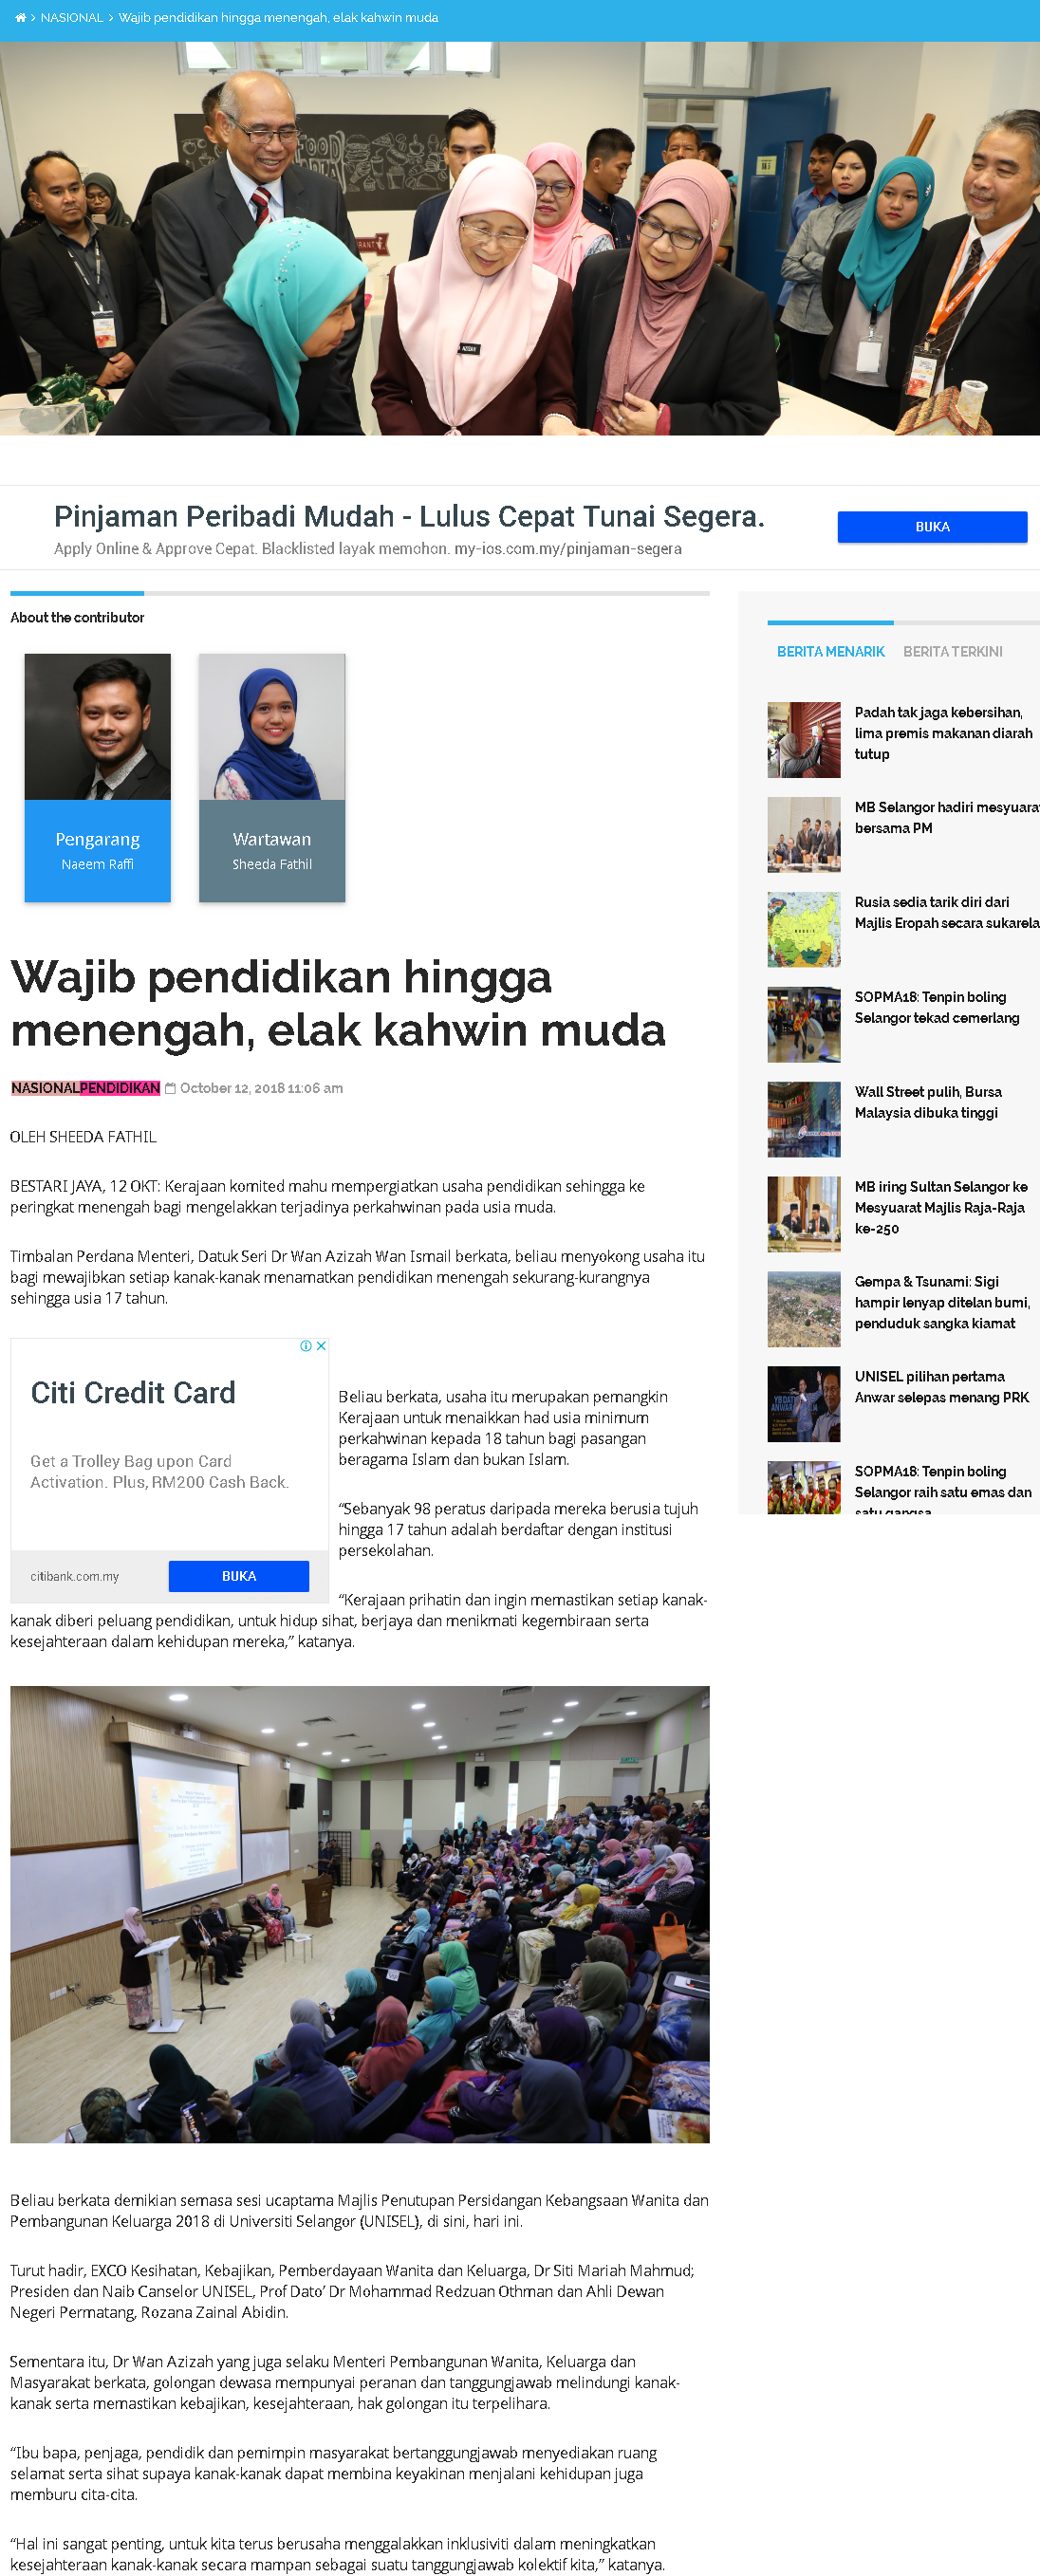 Selangor Kini Online - 12 Oktober 2018